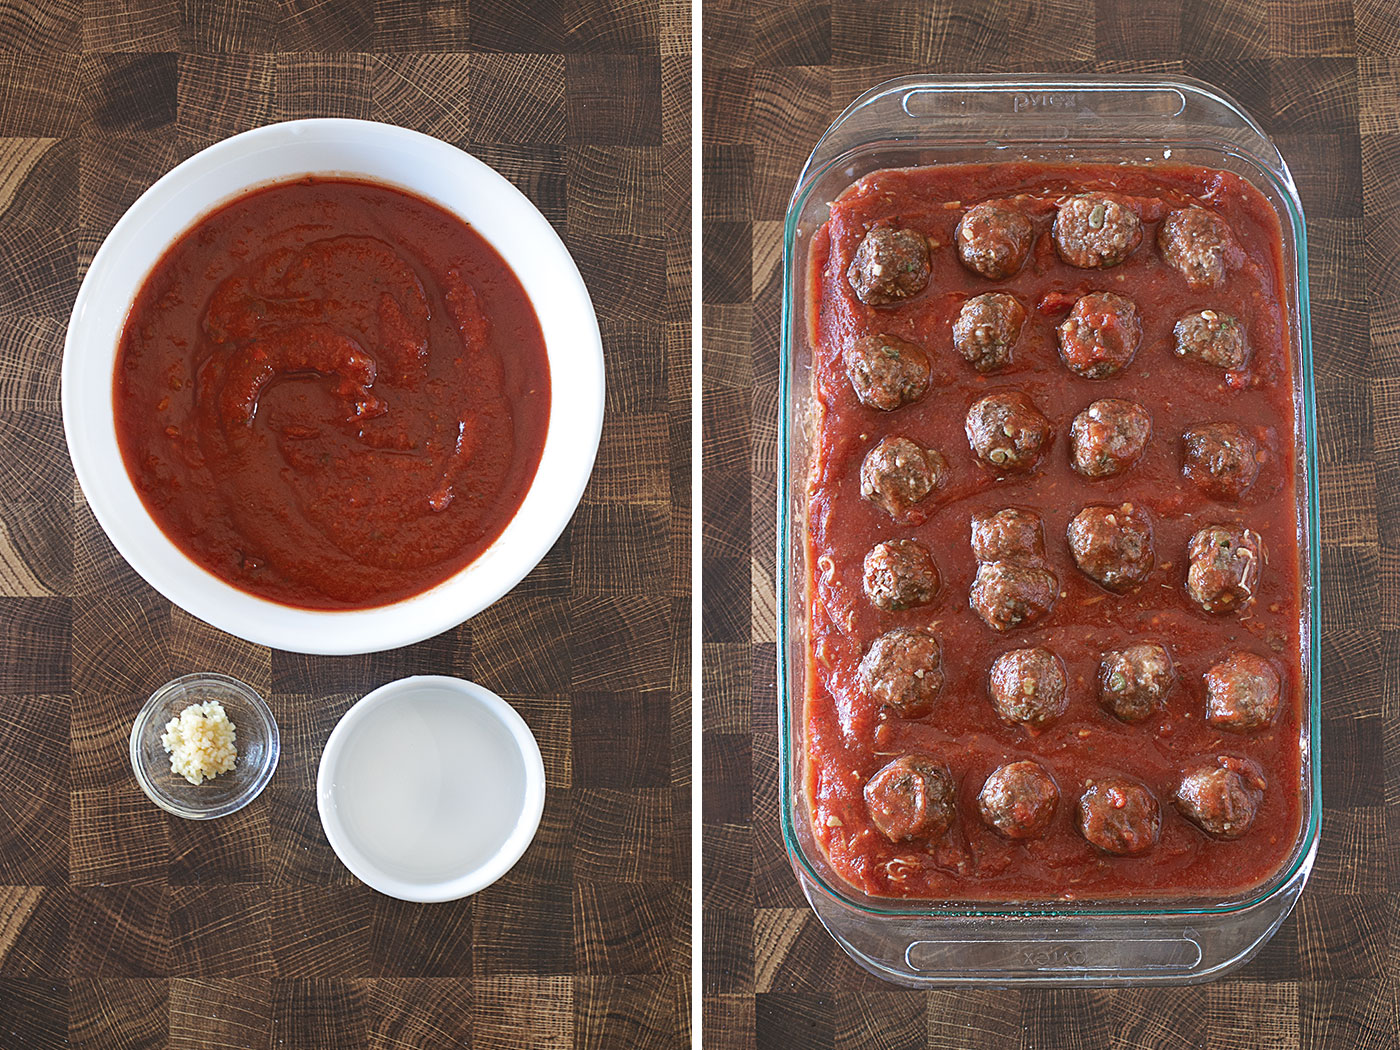 sauce and meatballs for meatball sub casserole